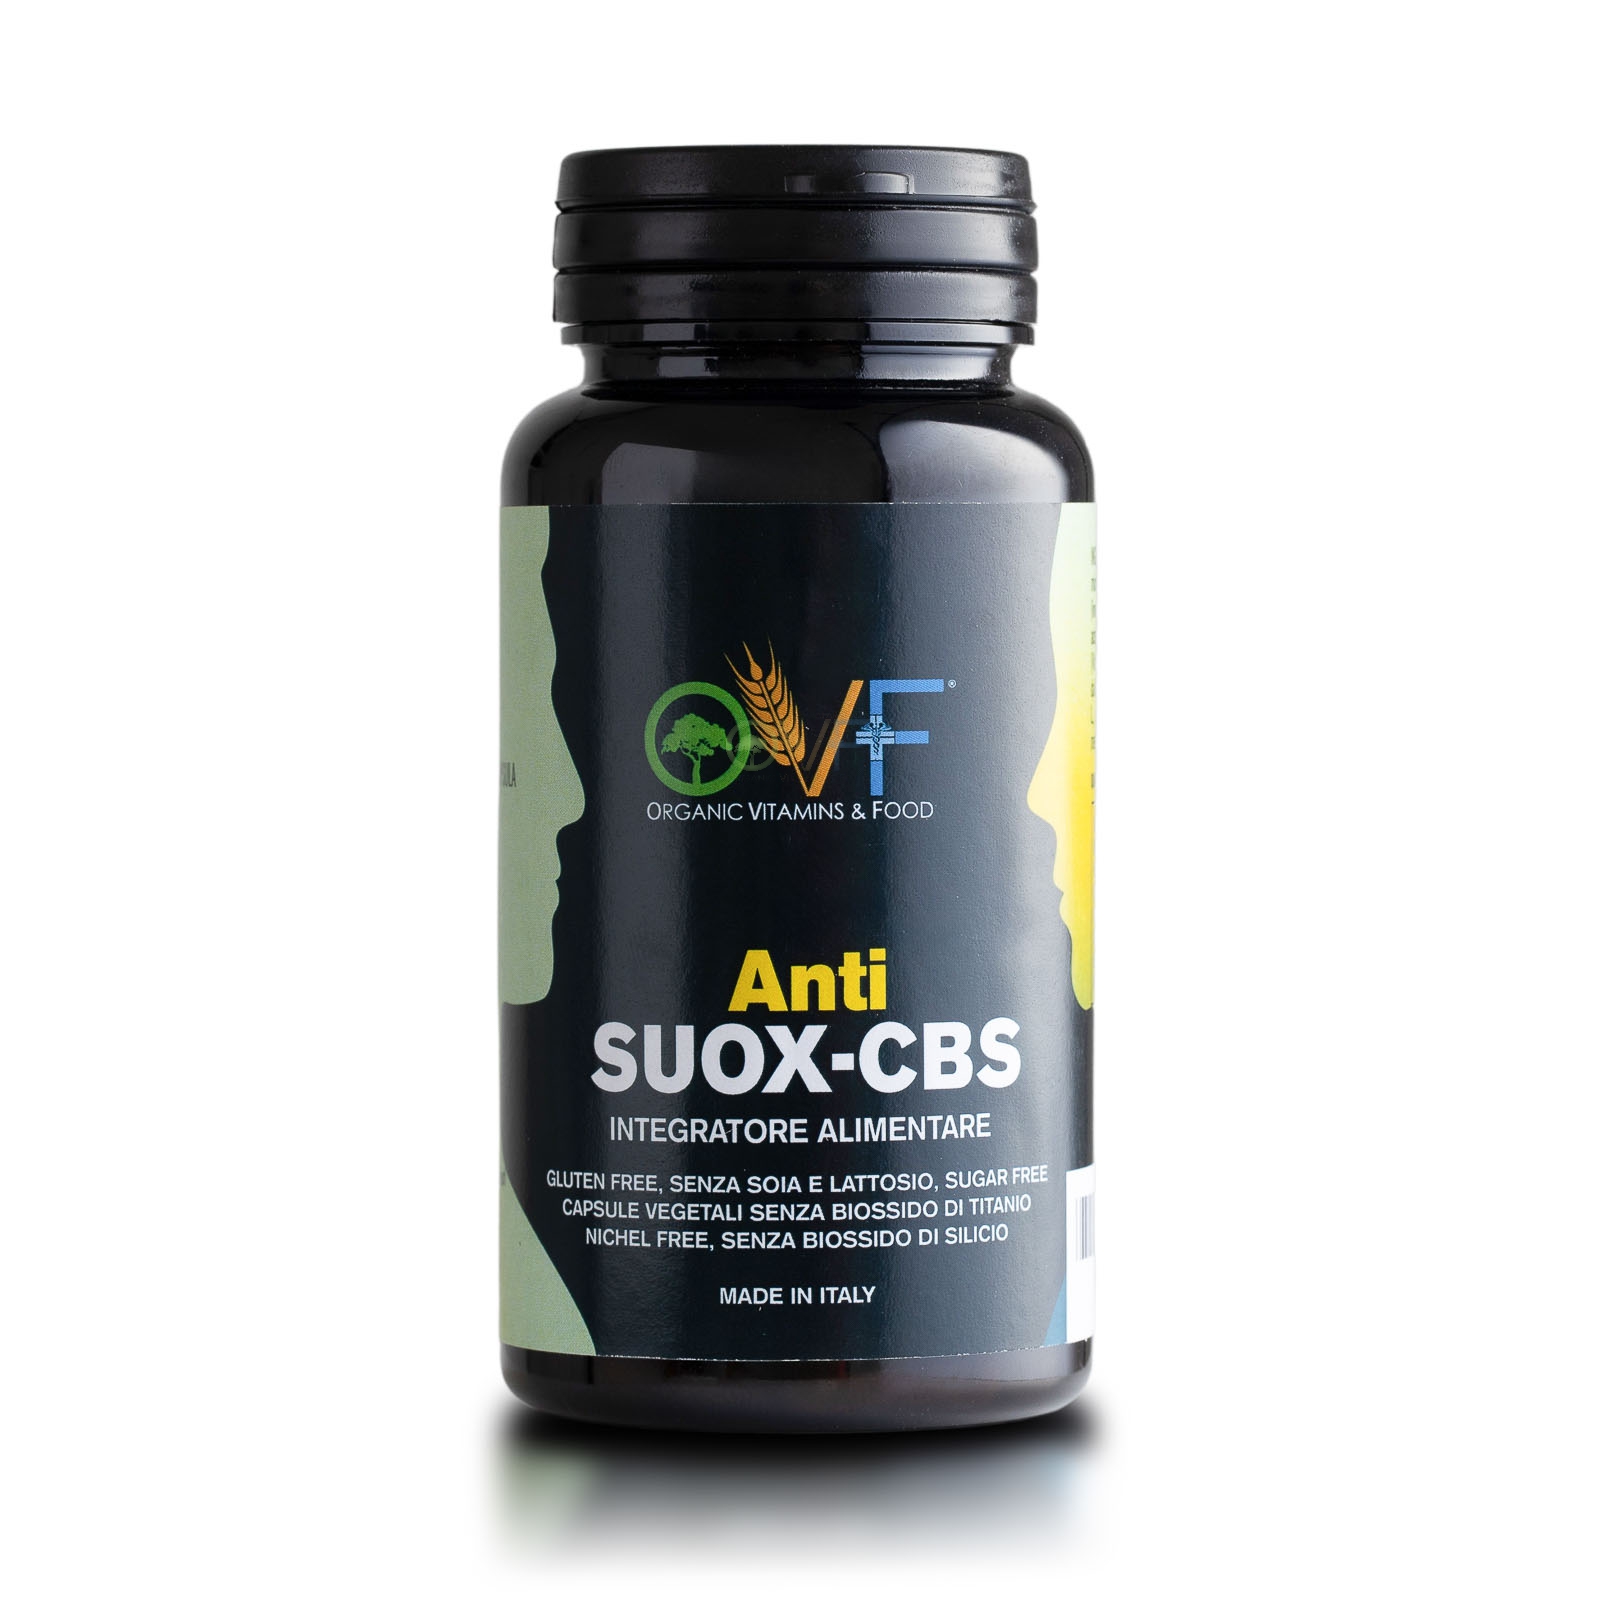 Ovf Anti Suox-Cbs 90 cps